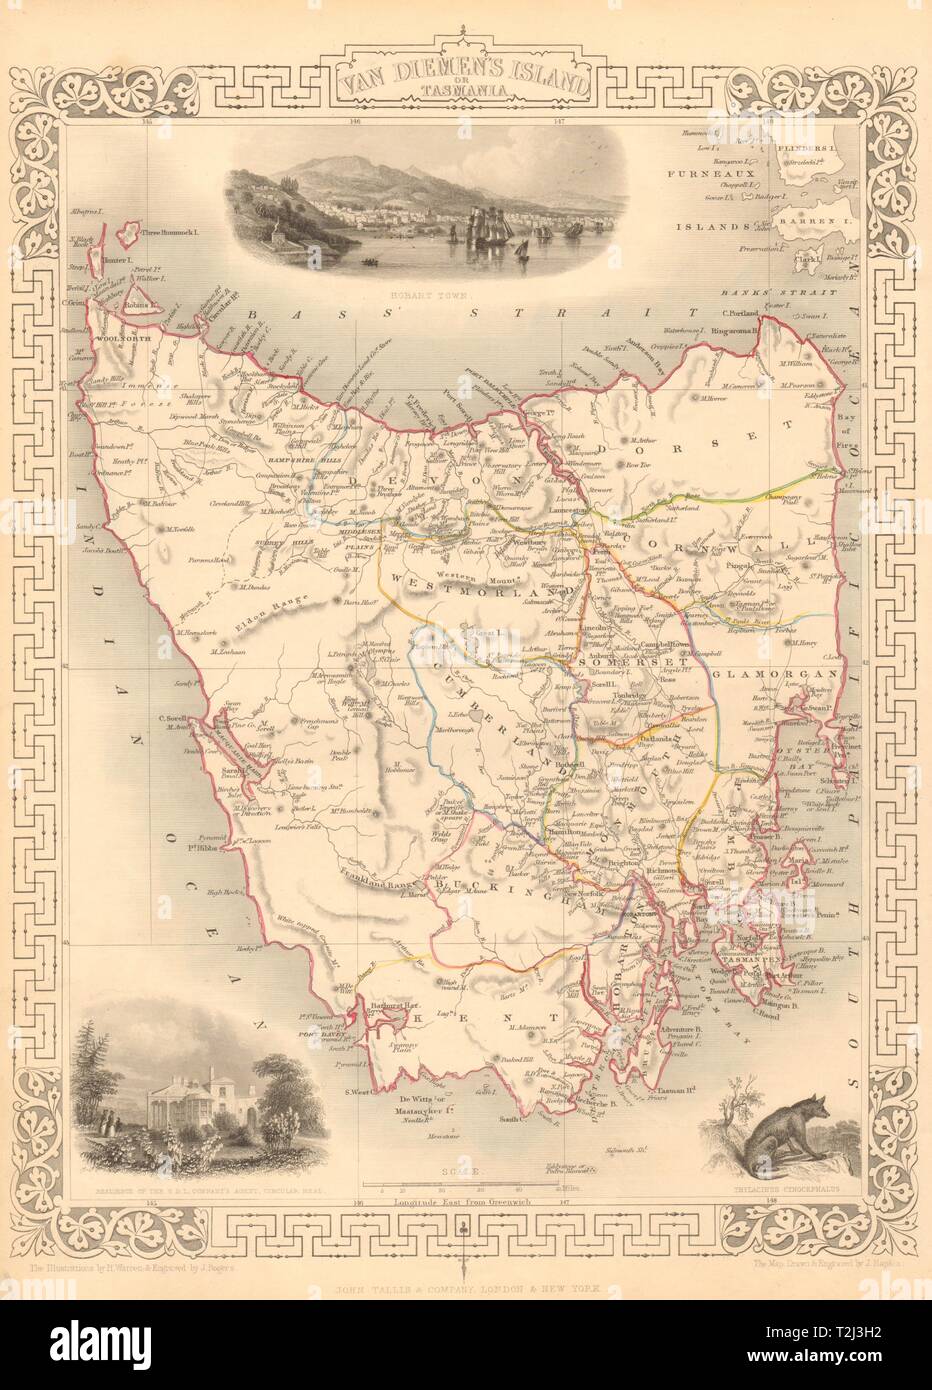 VAN DIEMEN'S ISLAND OR TASMANIA. Shows extinct Thylacine. RAPKIN/TALLIS 1851 map Stock Photo